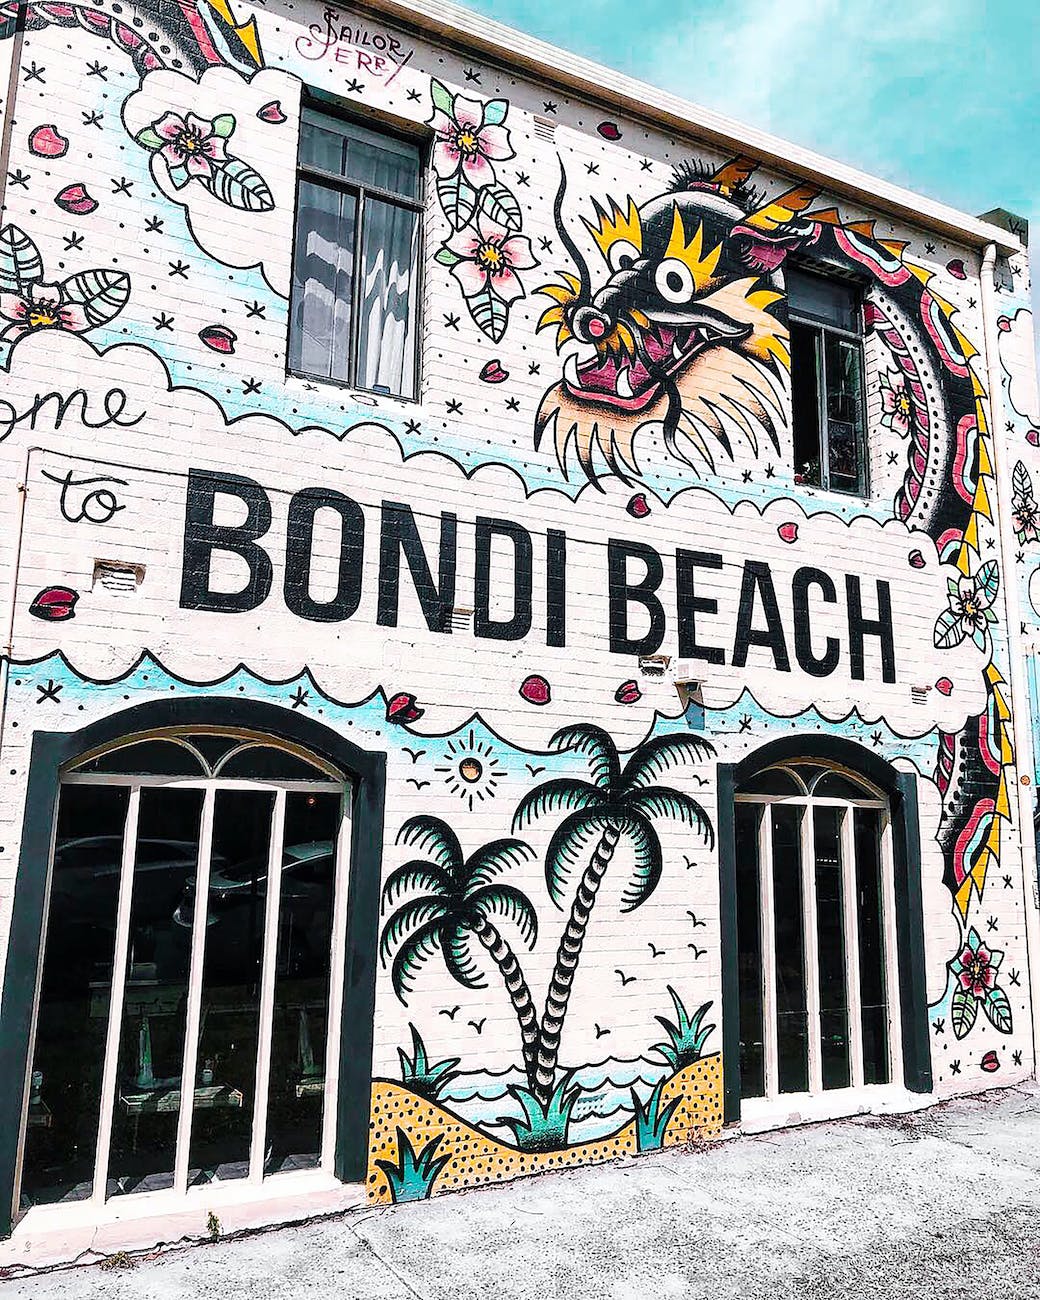 bondi beach building with graffiti wall art